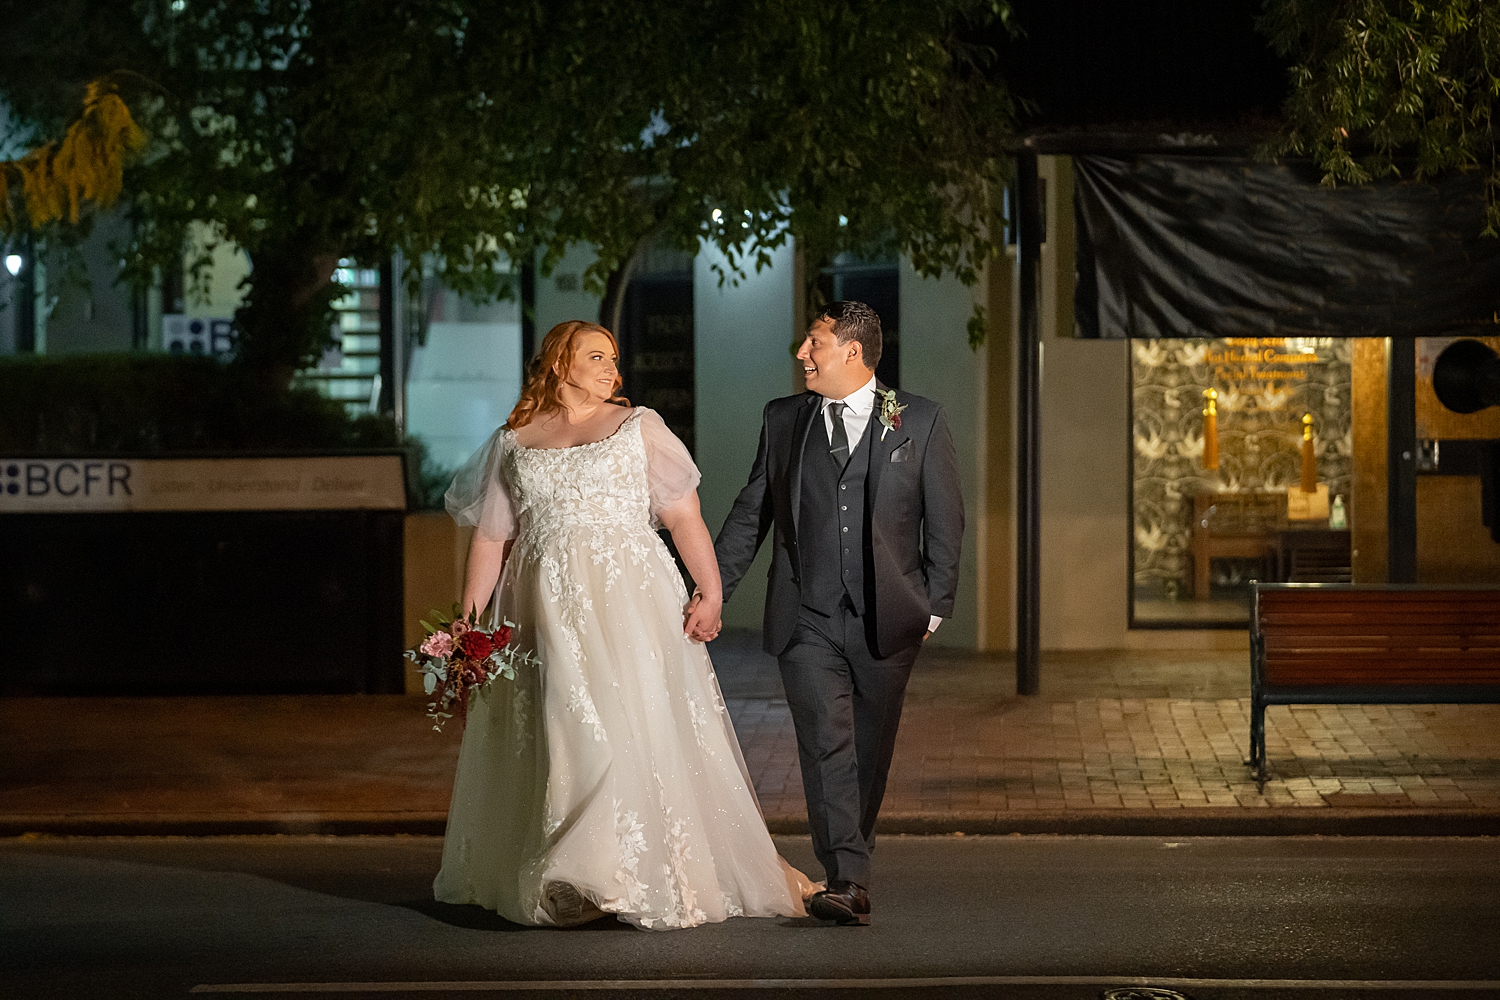 Wedding Couple, Adelaide CBD Dusk Photoshoot,DreamTeamImaging